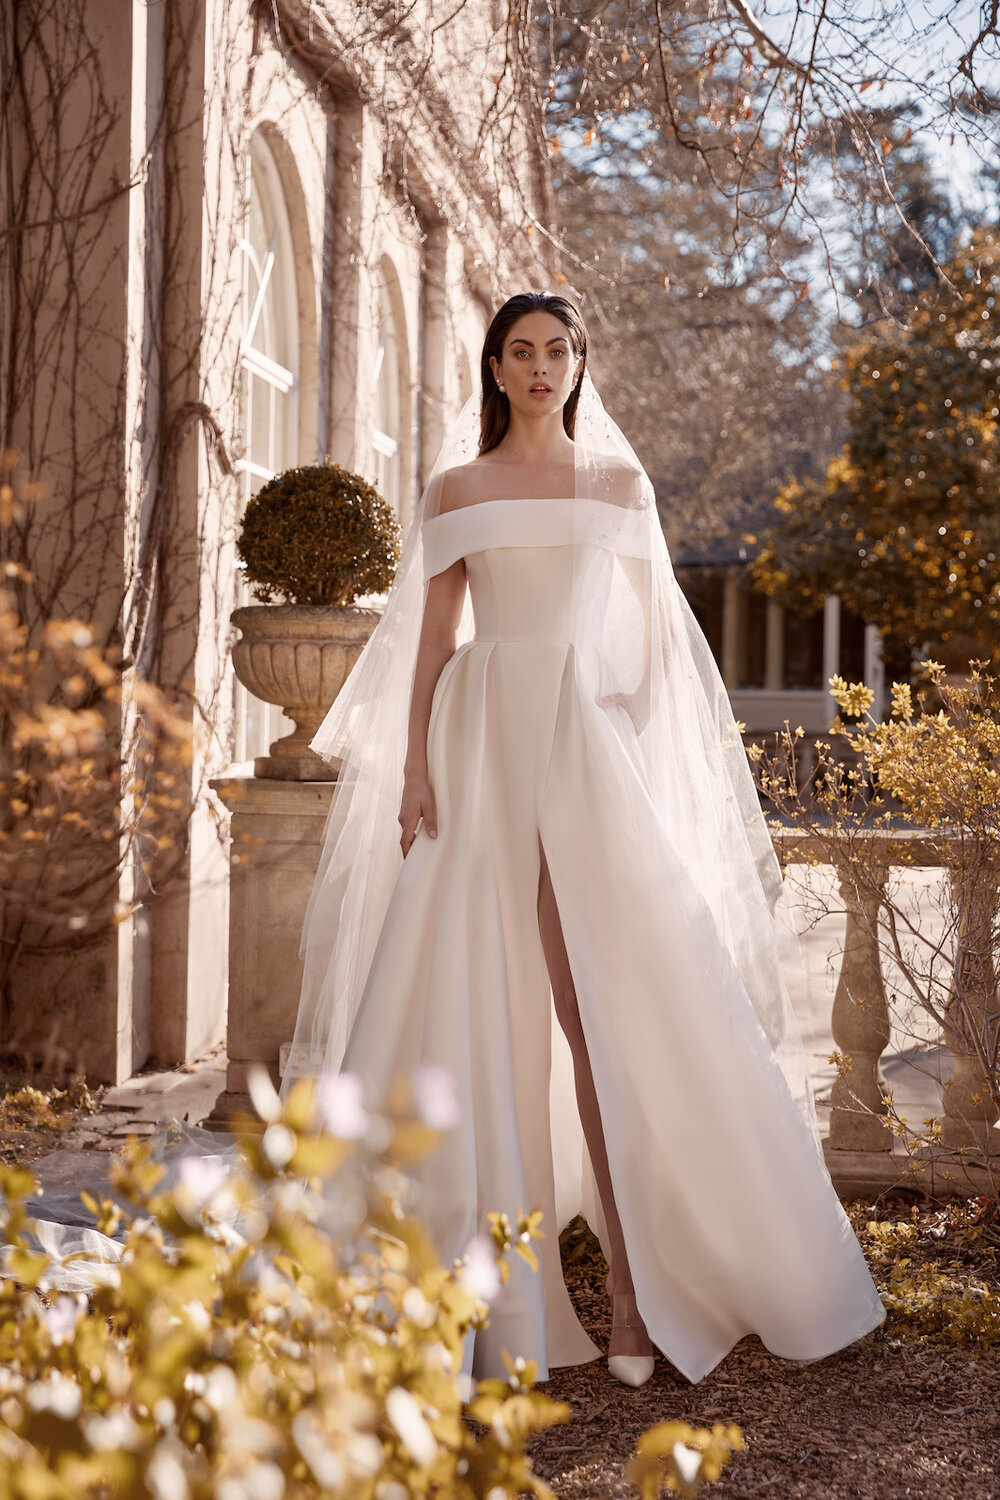 Veils for all brides - Wedding dress accessories - Leah S Designs